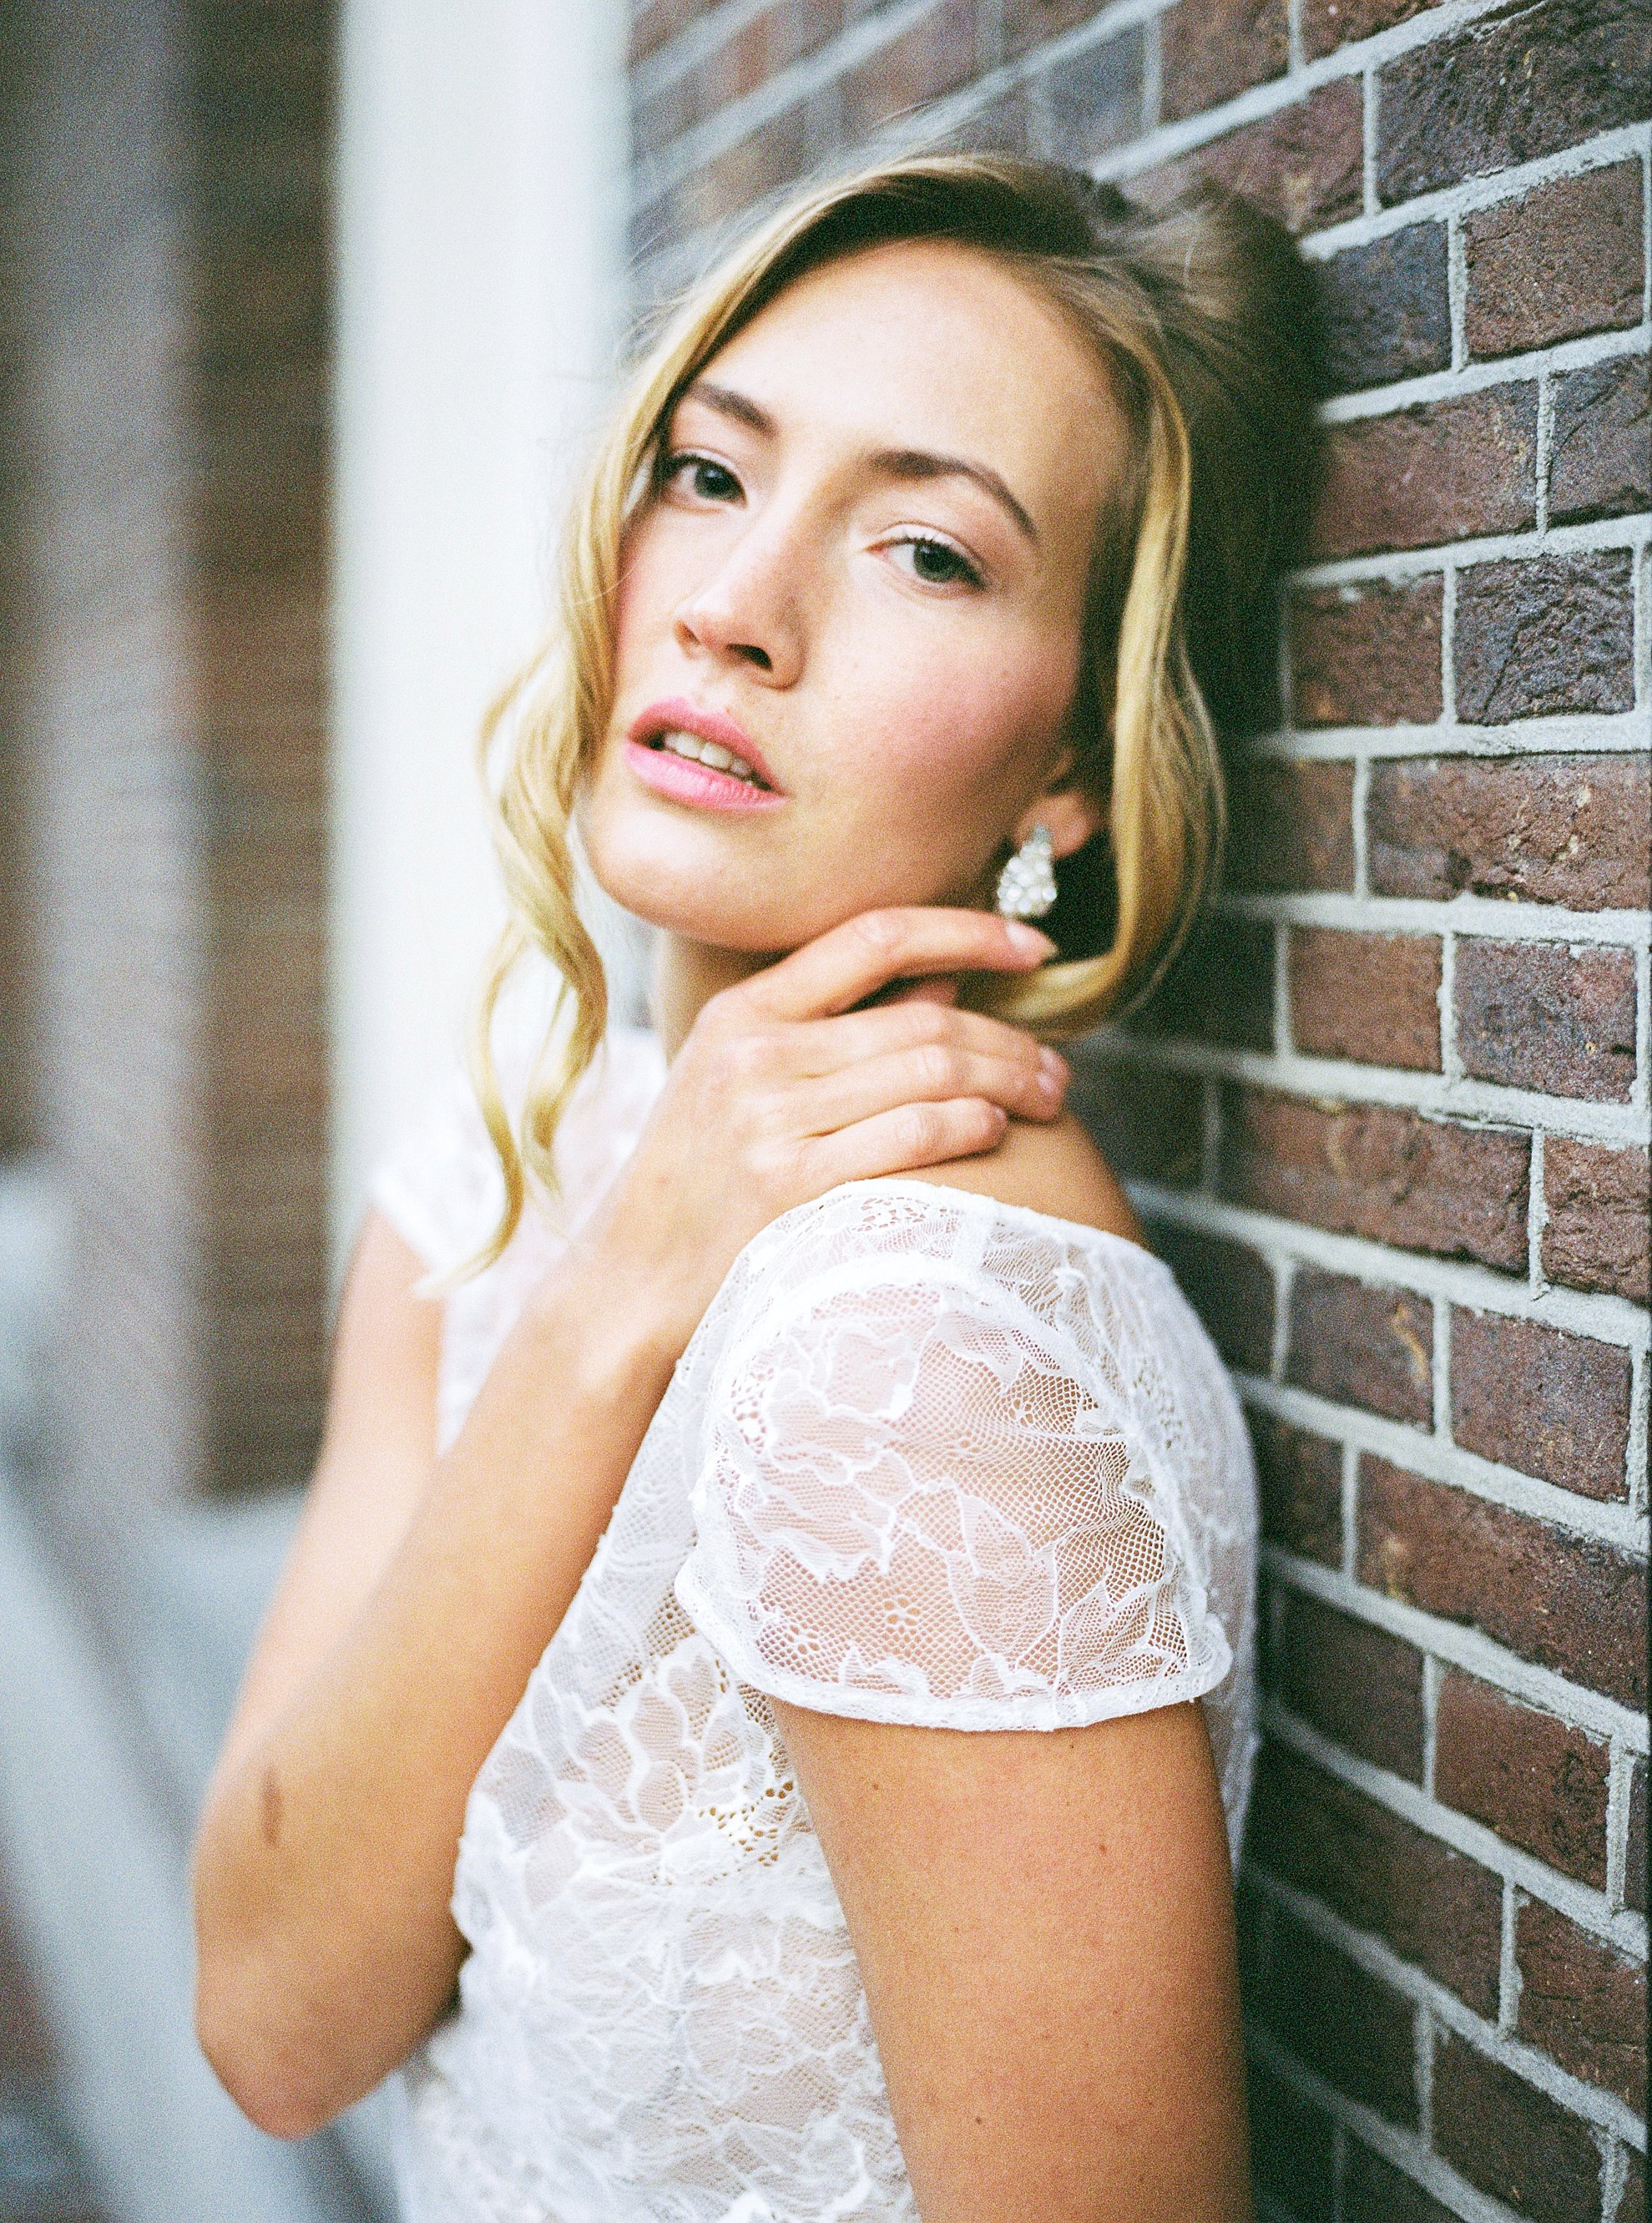 Amanda-Drost-Photography-fotografie-bruiloft-trouwen-winter-TheNetherlands_0083.jpg